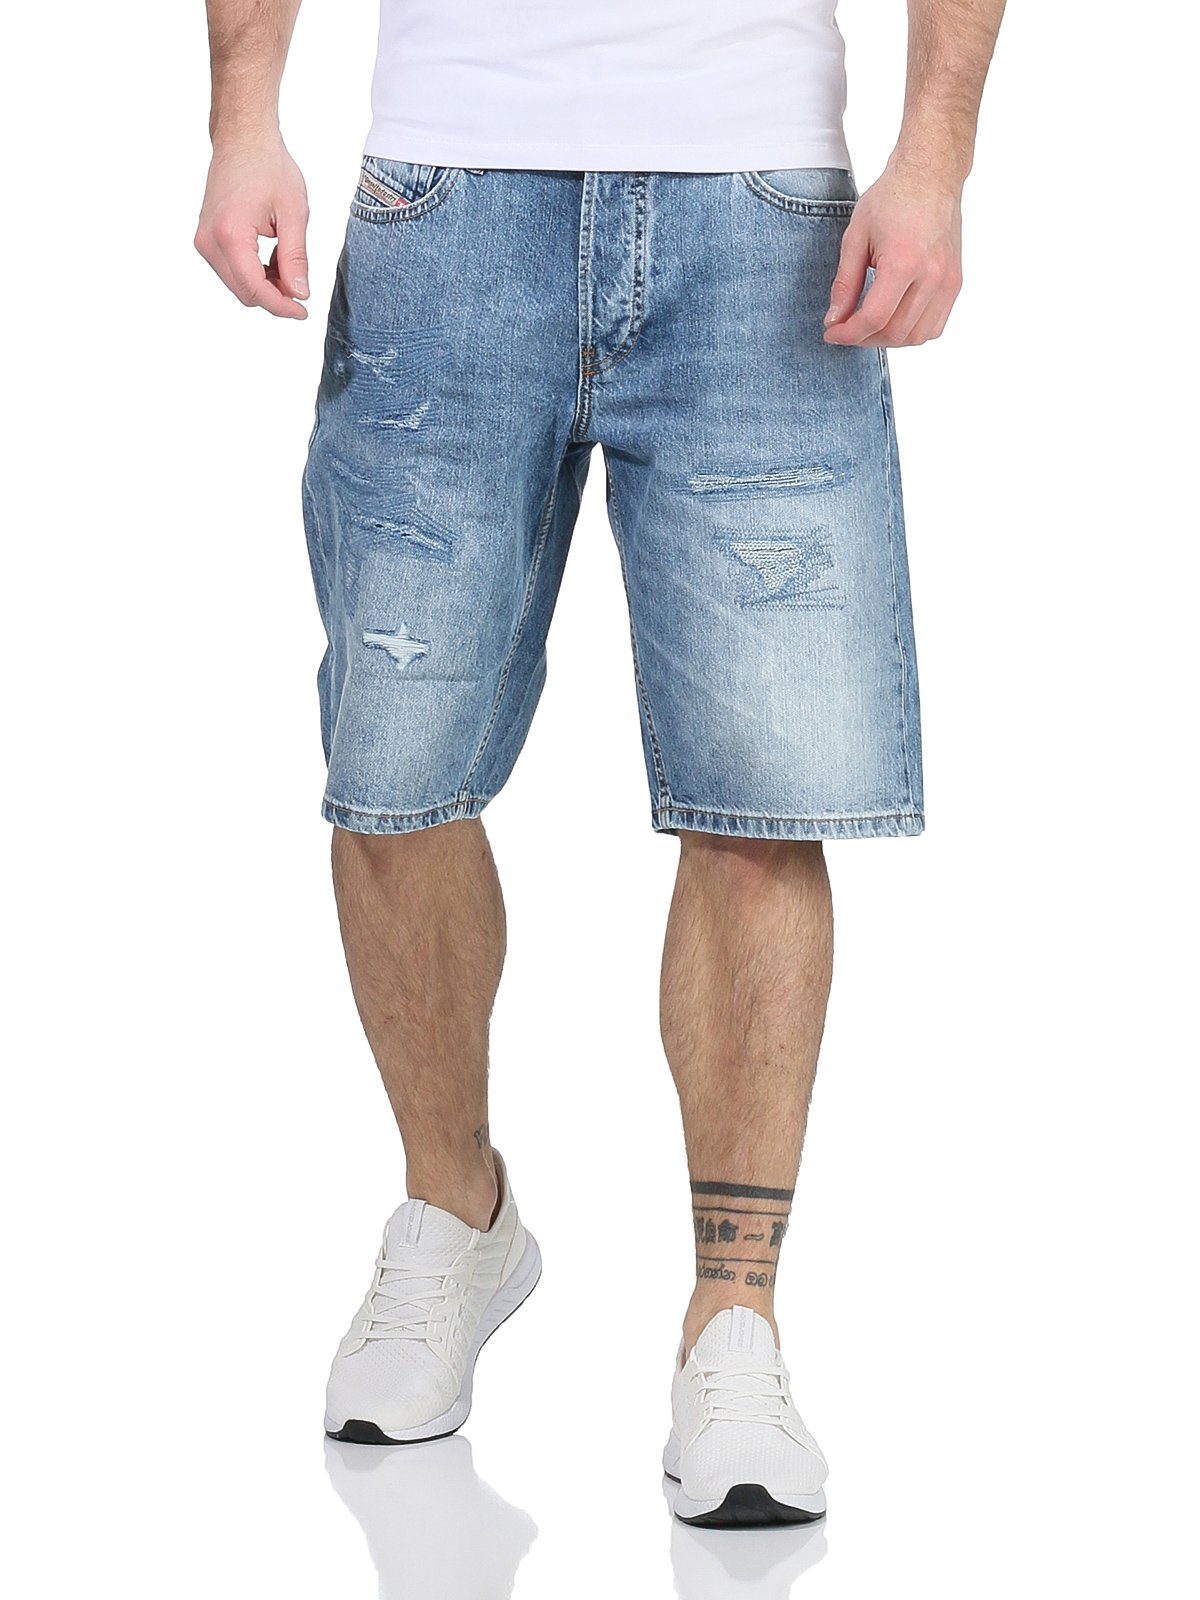 Blau Vintage RB012 Herren Shorts kurze RG48R Kroshort Shorts, Diesel Jeansshorts Used-Look Jeans Hose dezenter Look